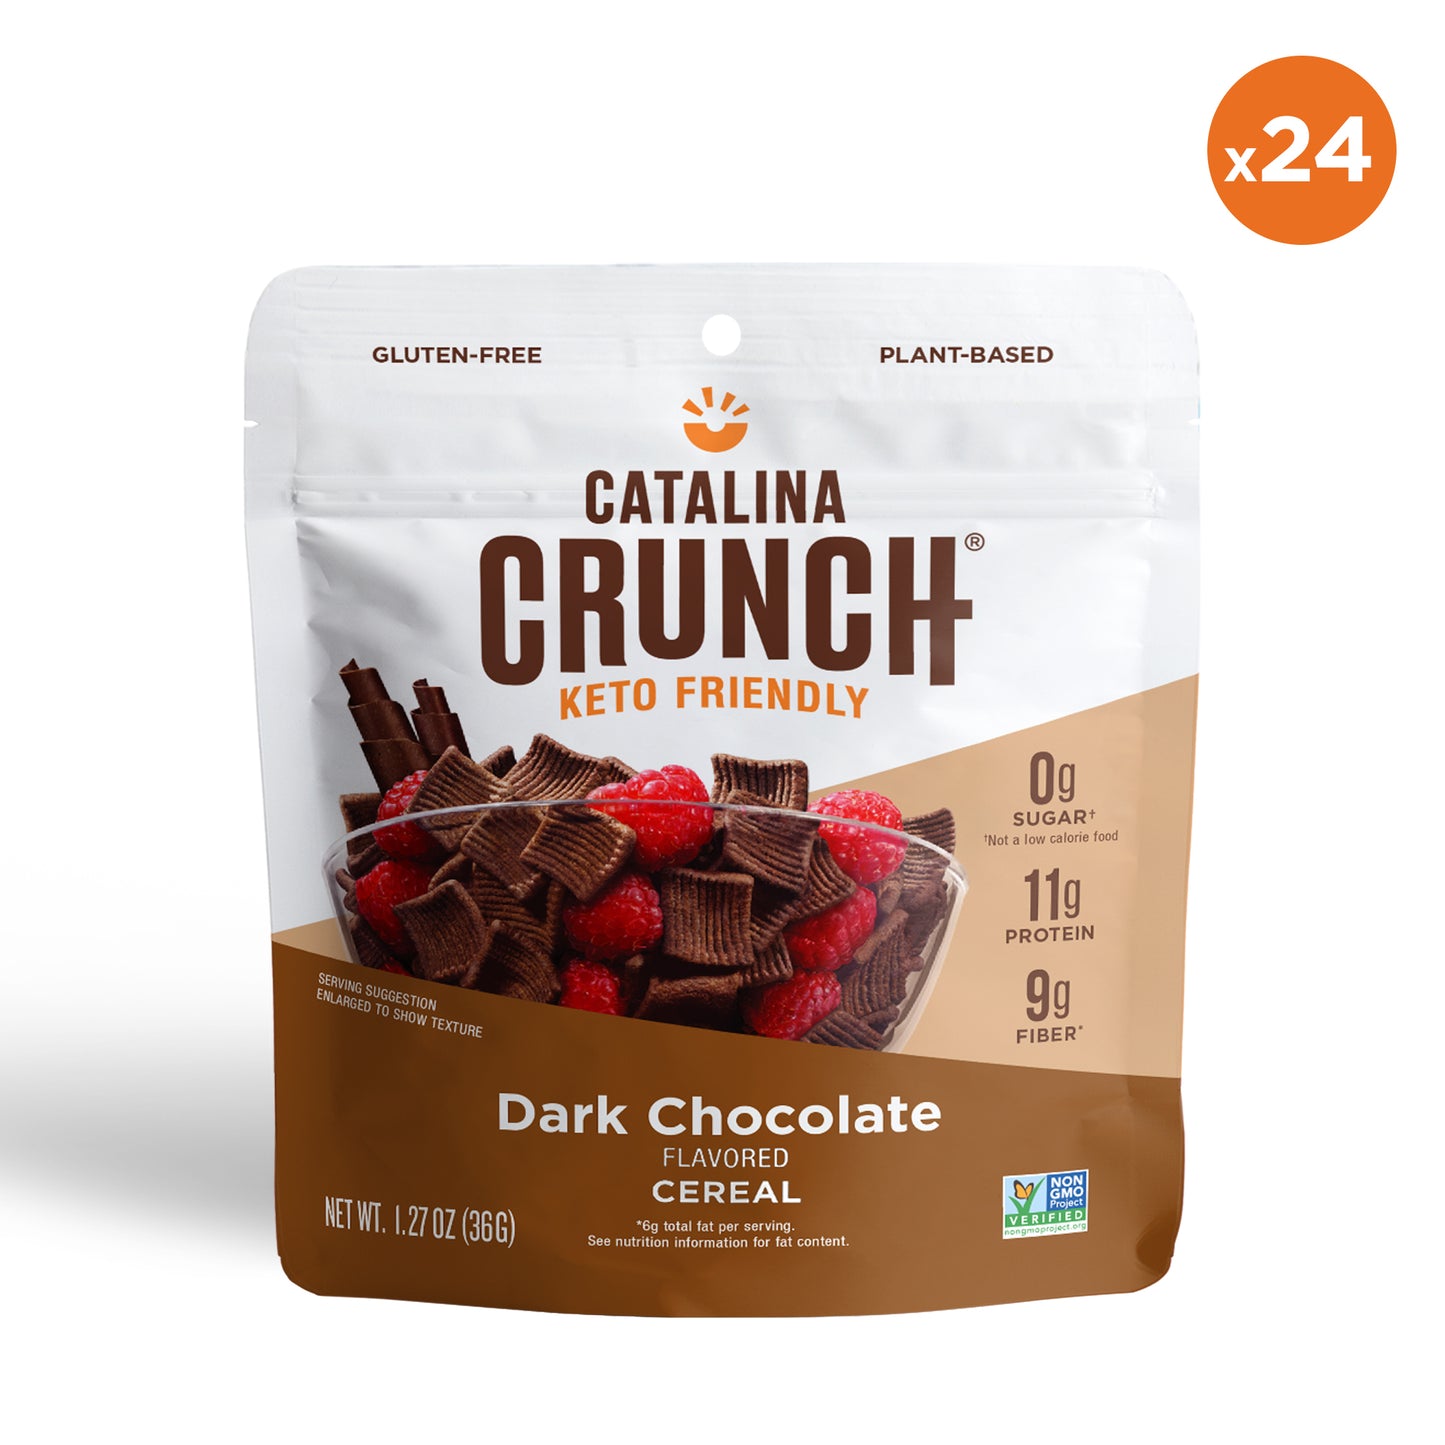 Sugar-Free Dark Chocolate Bars 24